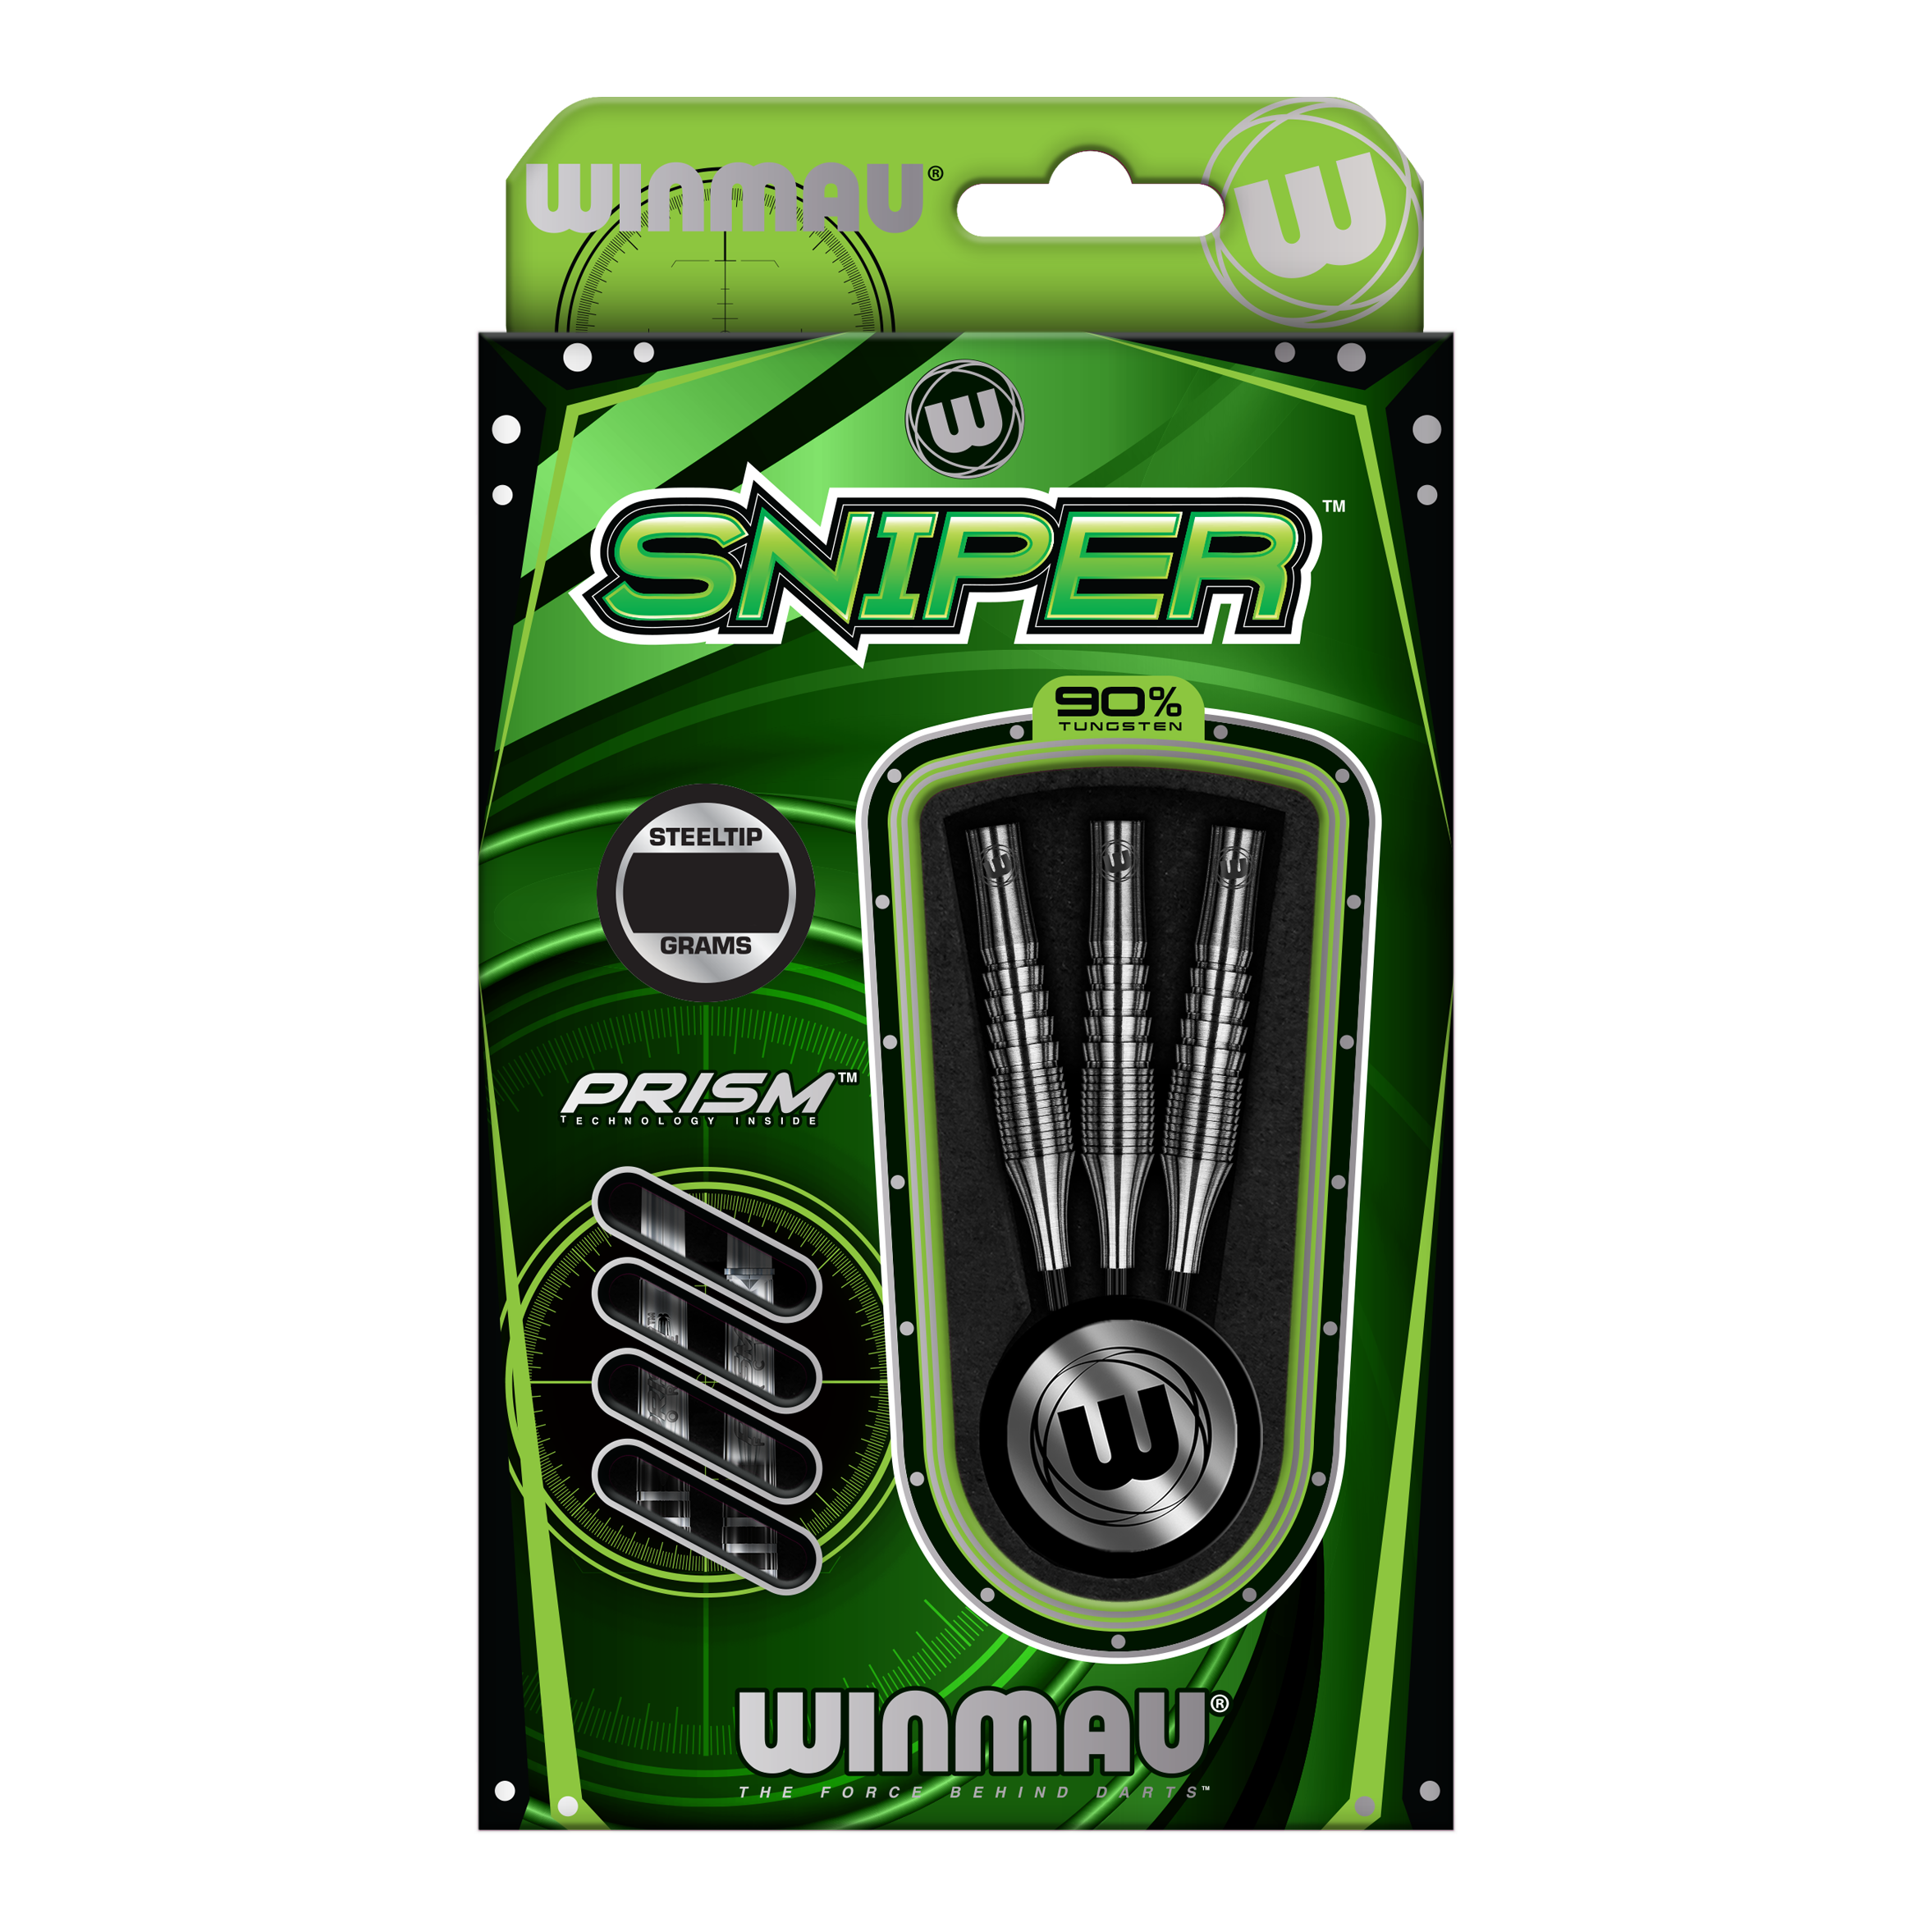 Winmau Sniper V1 steel darts